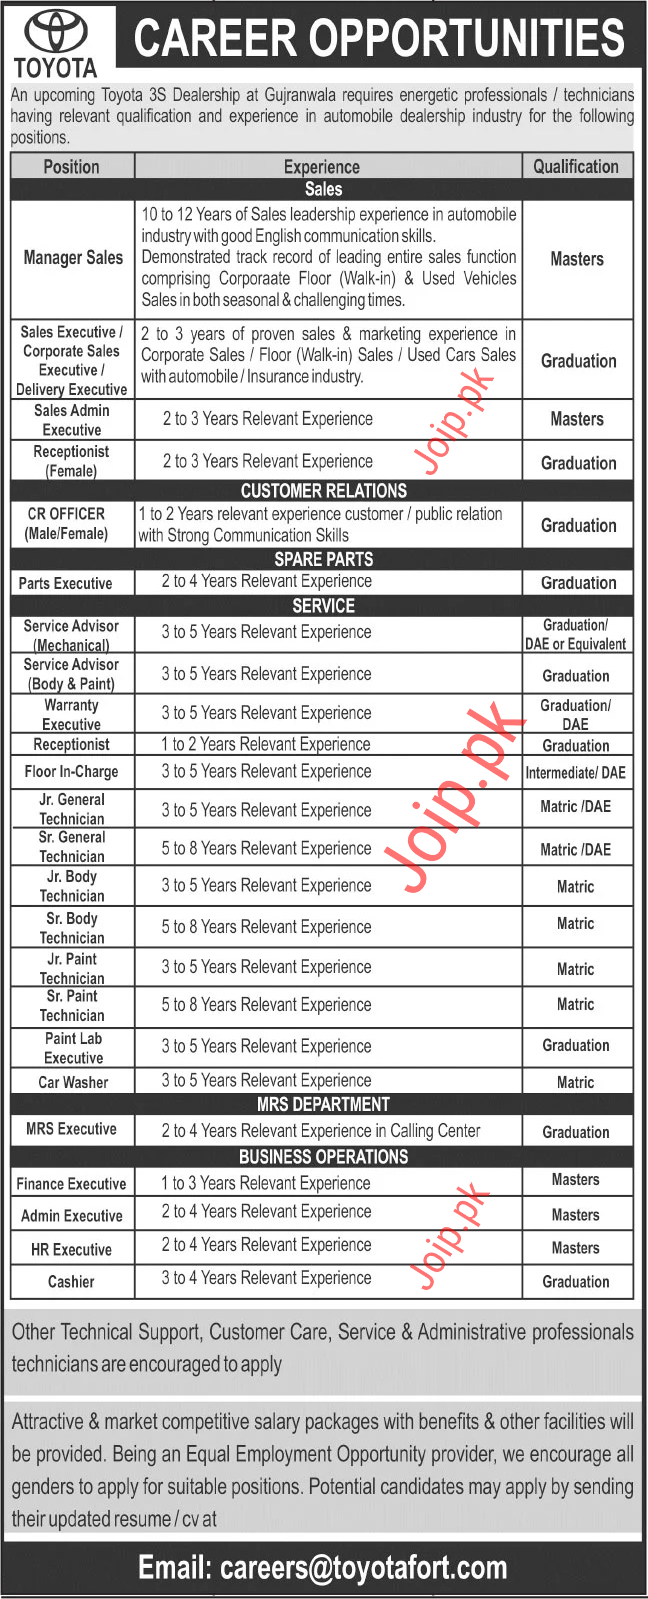 Toyota Jobs 2021 - Latest Careers by Toyota in Pakistan (25+ Vacancies)